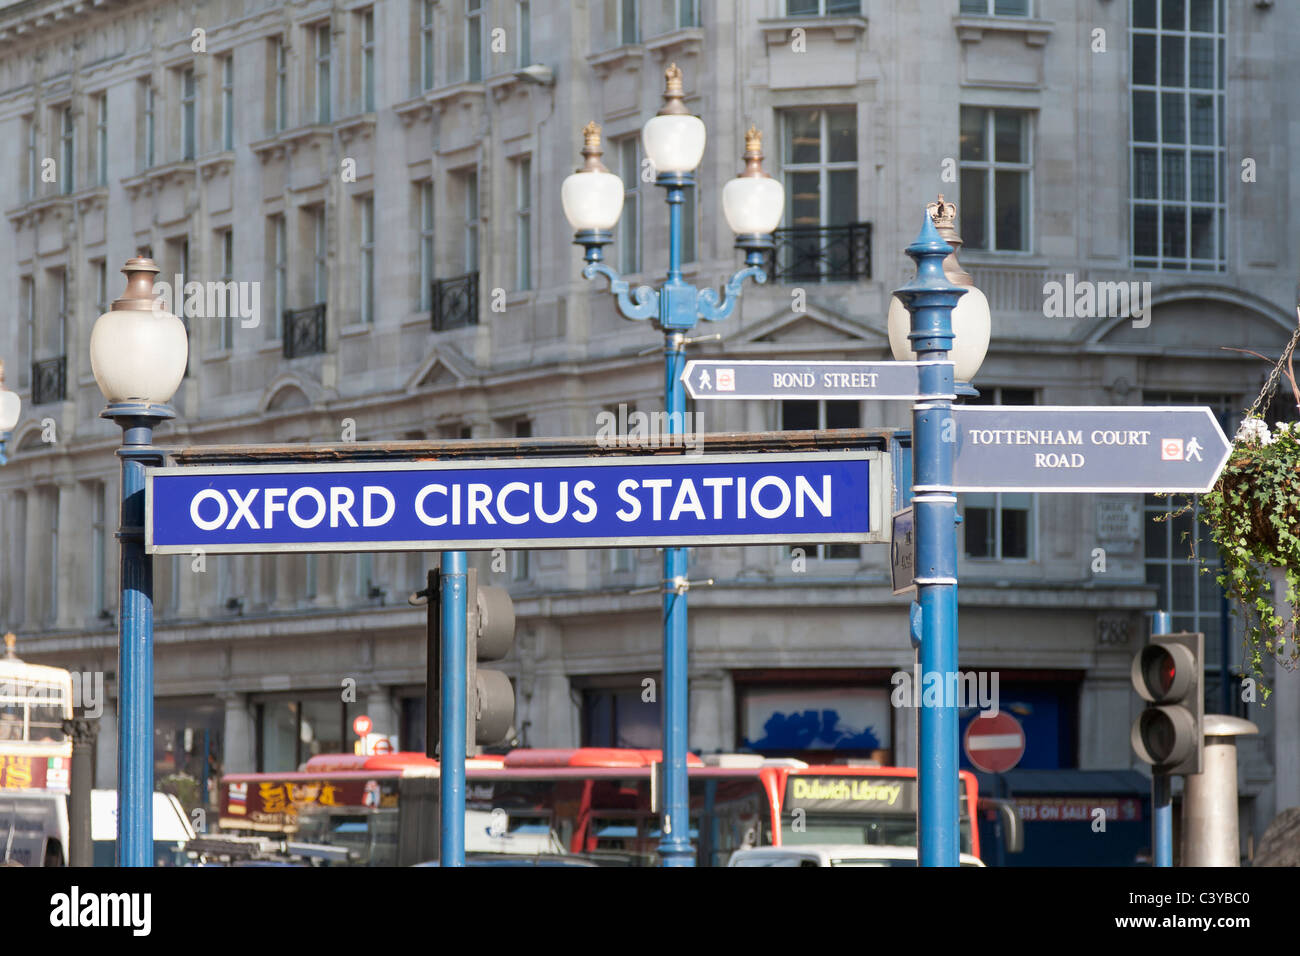 Oxford Circus Station sign,Oxford circus, London, UK Stock Photo